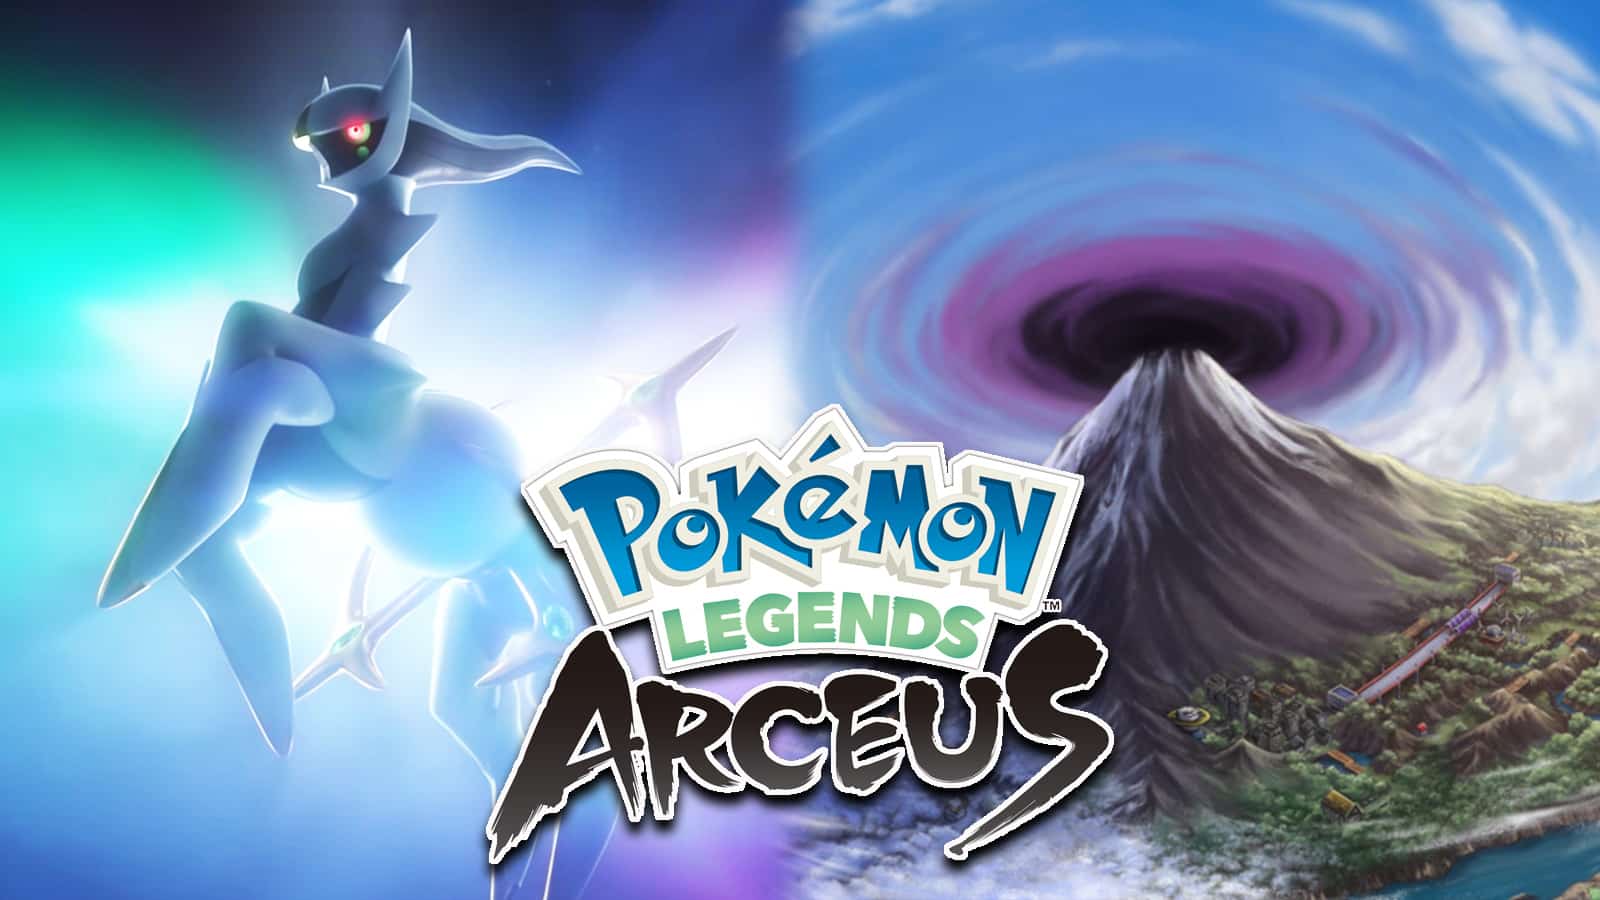 I FINALLY got shiny Arceus in Pokemon Legends Arceus 